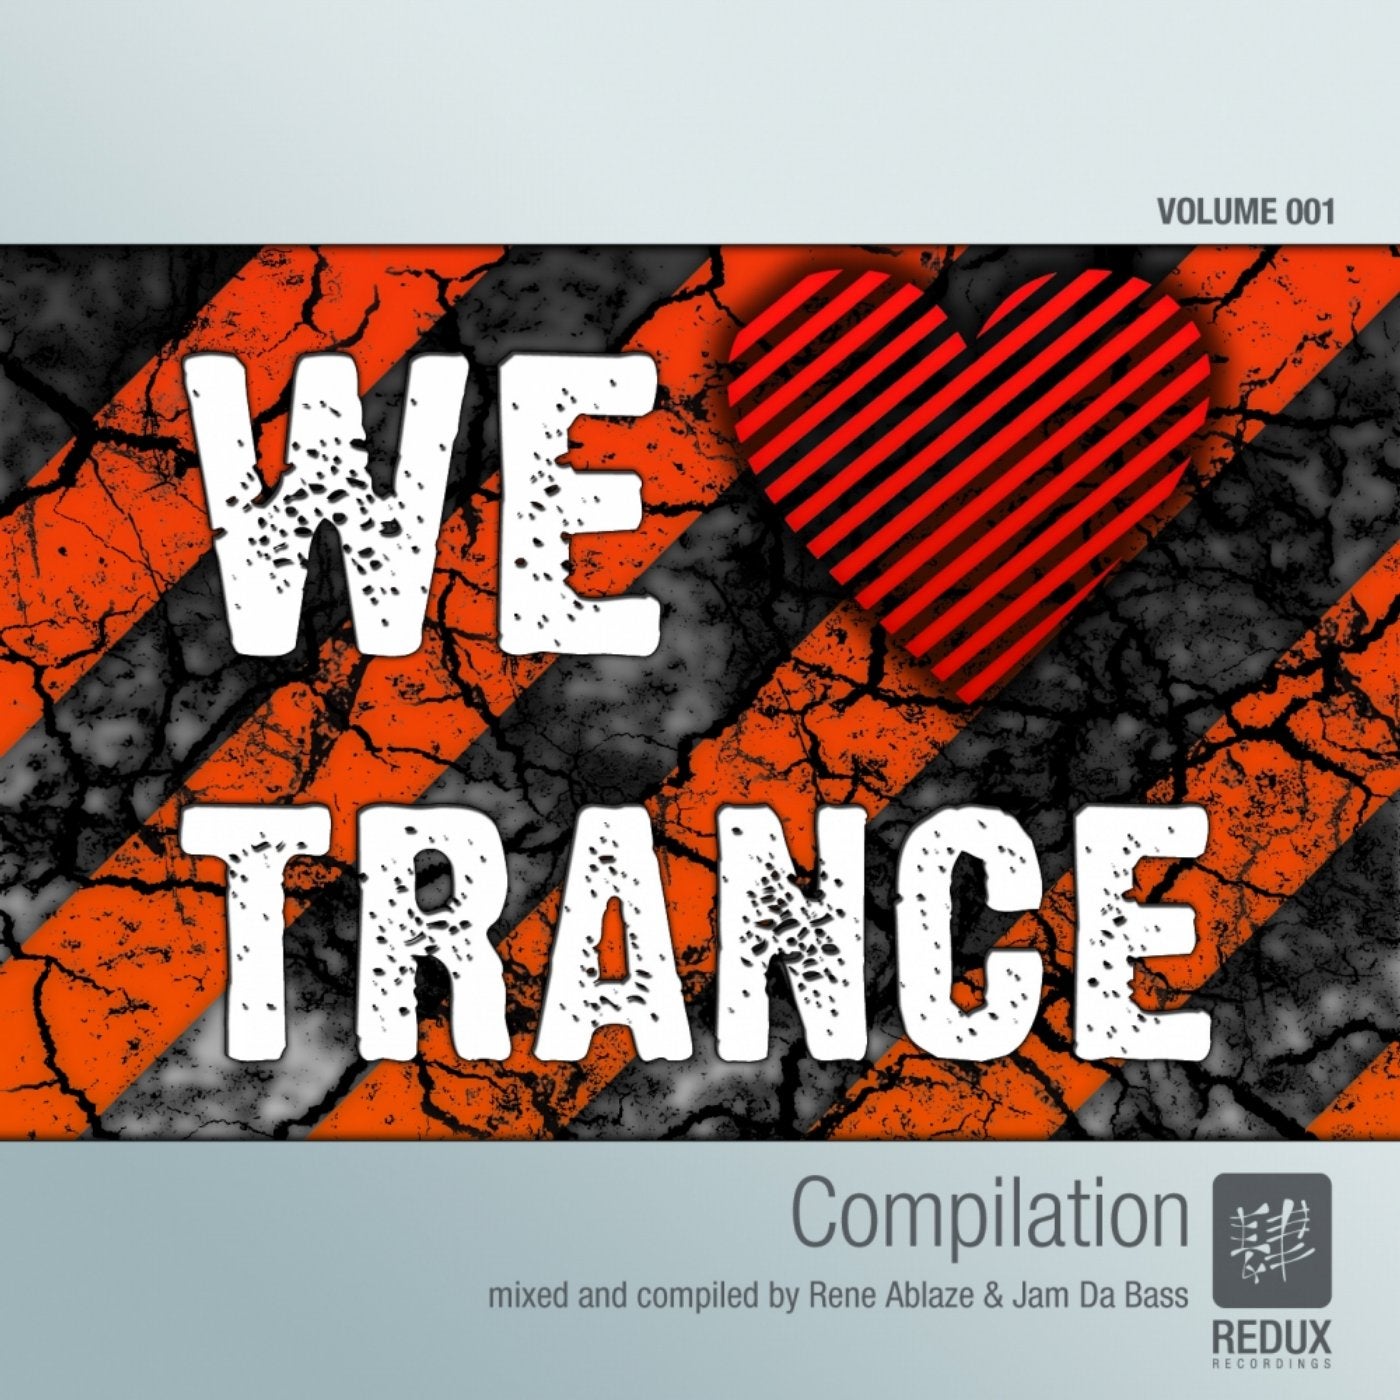 We Love Trance Vol. 1